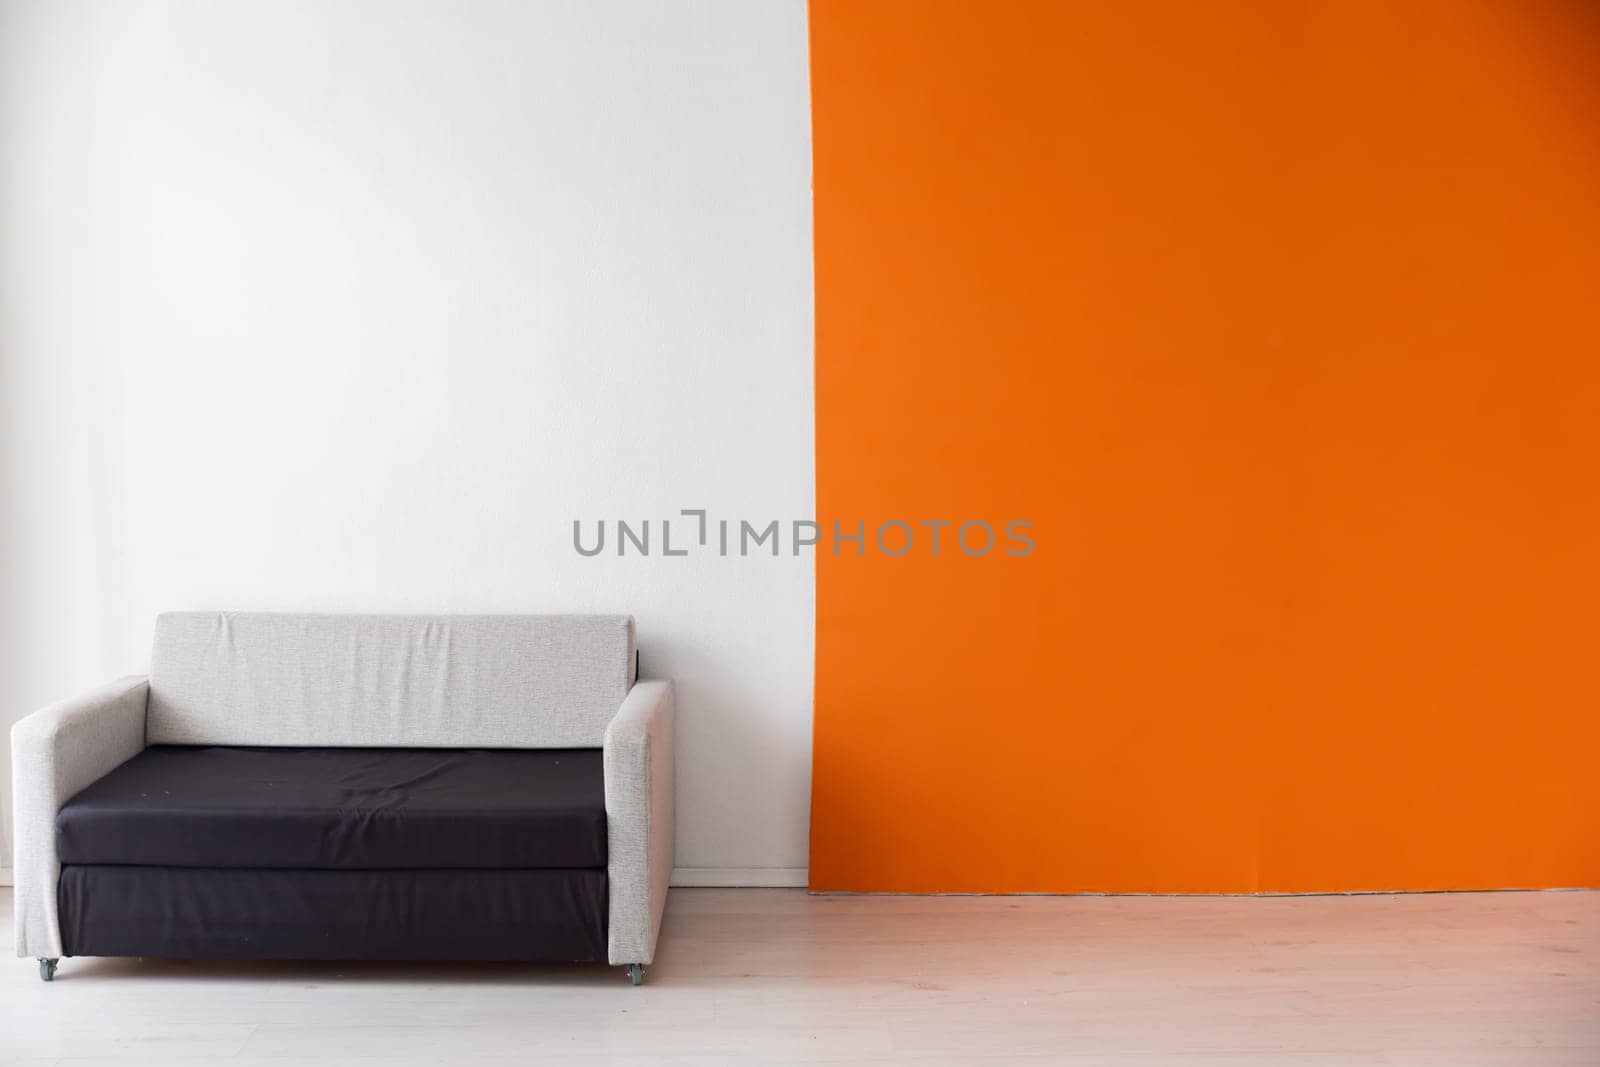 sofa near the white orange wall in a room